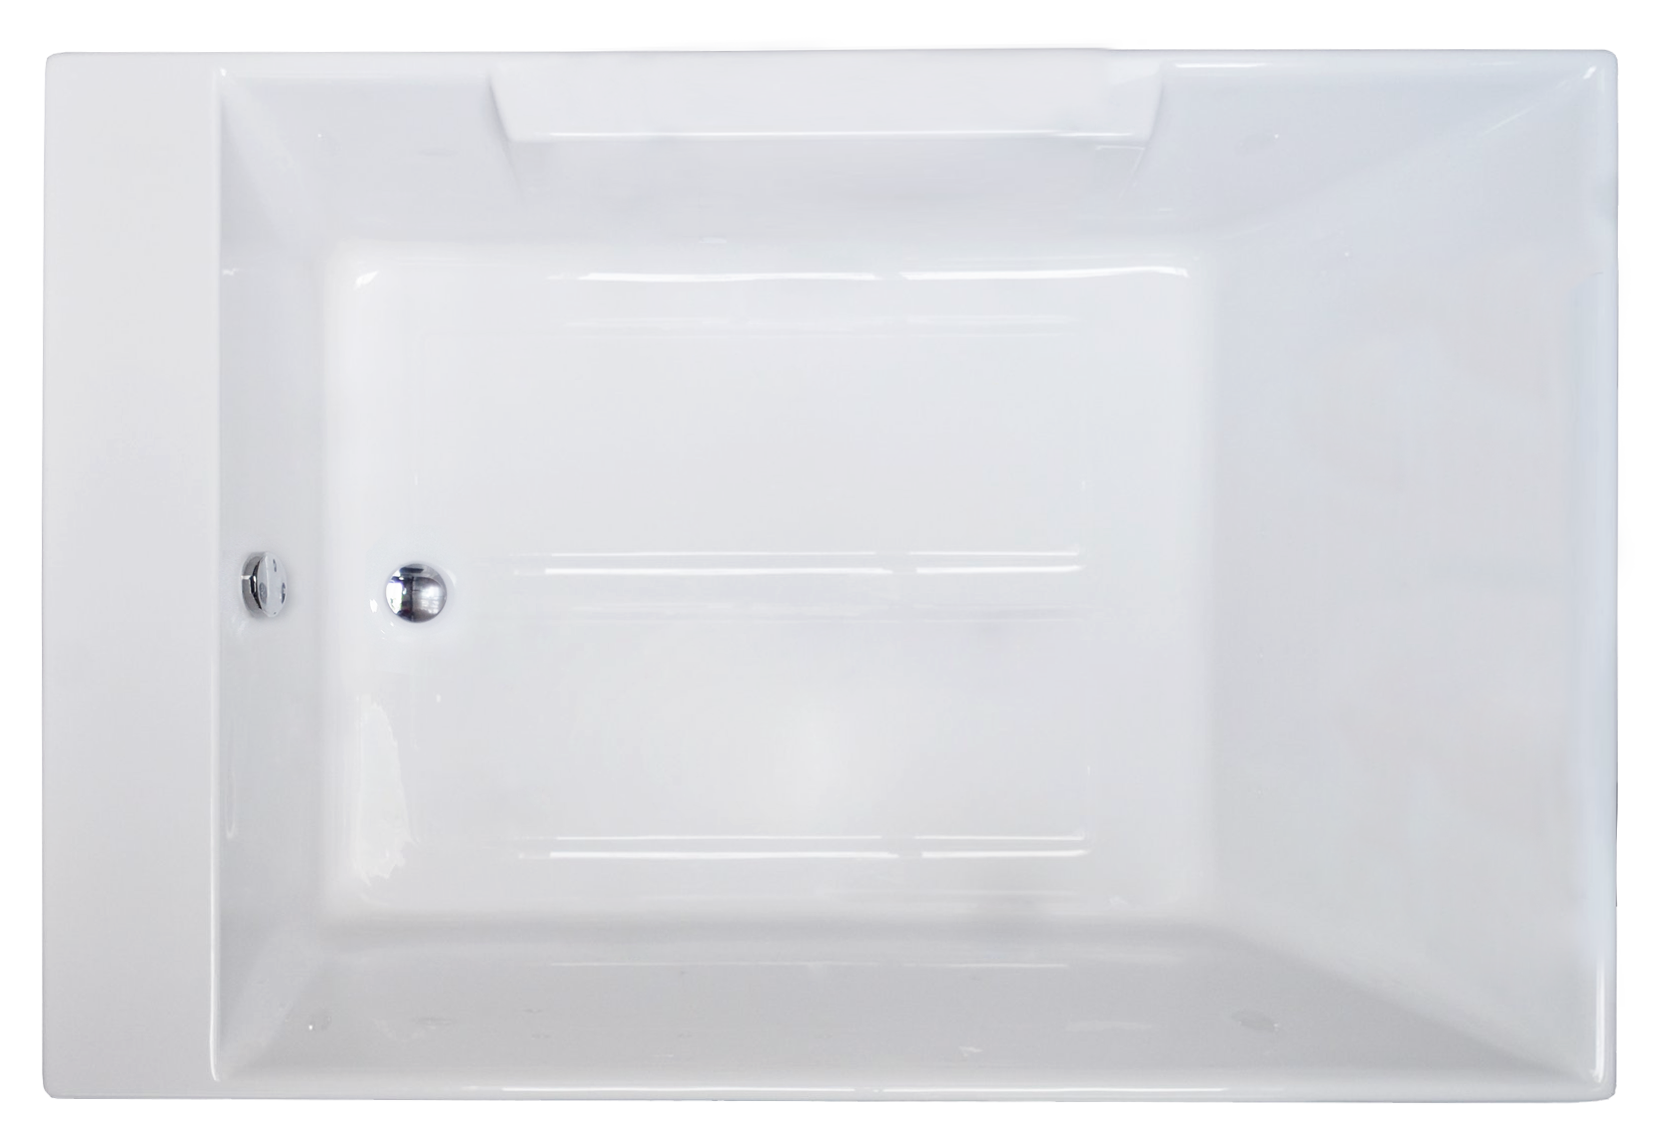 Акриловая ванна Royal Bath Triumph 180x120 в сборе, размер 180x120, цвет белый RB665100SB - фото 3